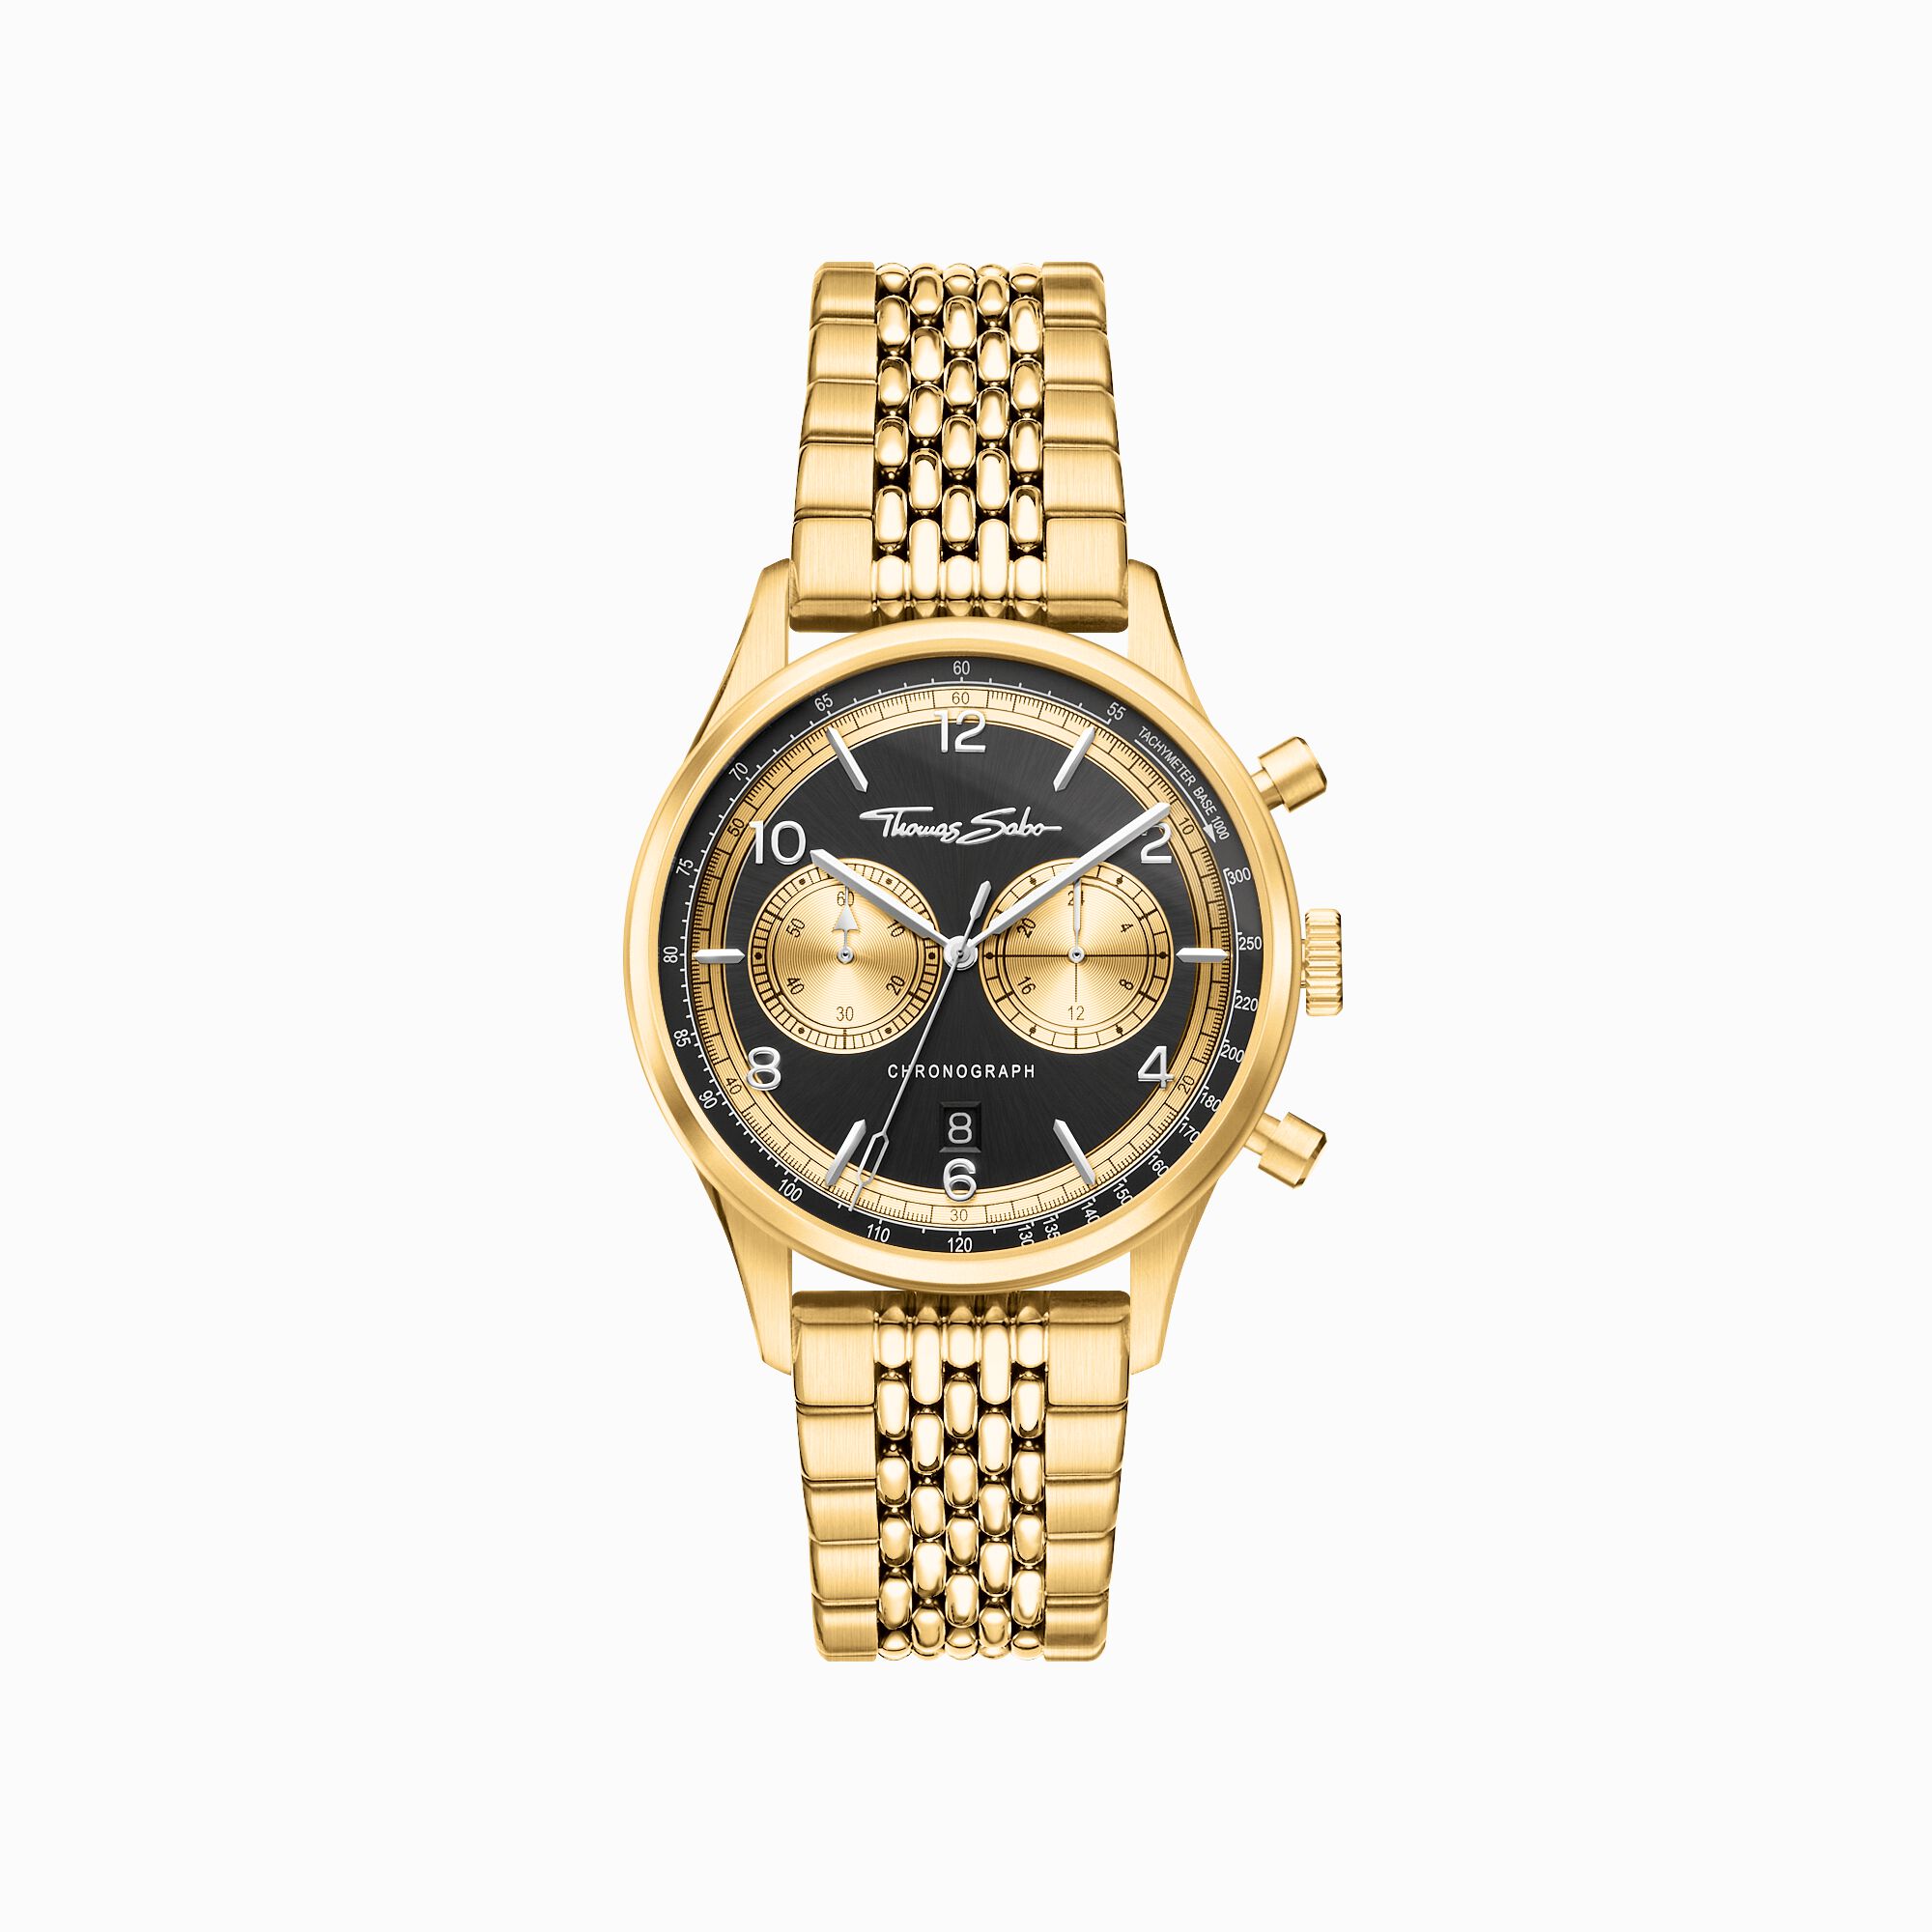 Men's watch Rebel Chronograph gold | THOMAS SABO